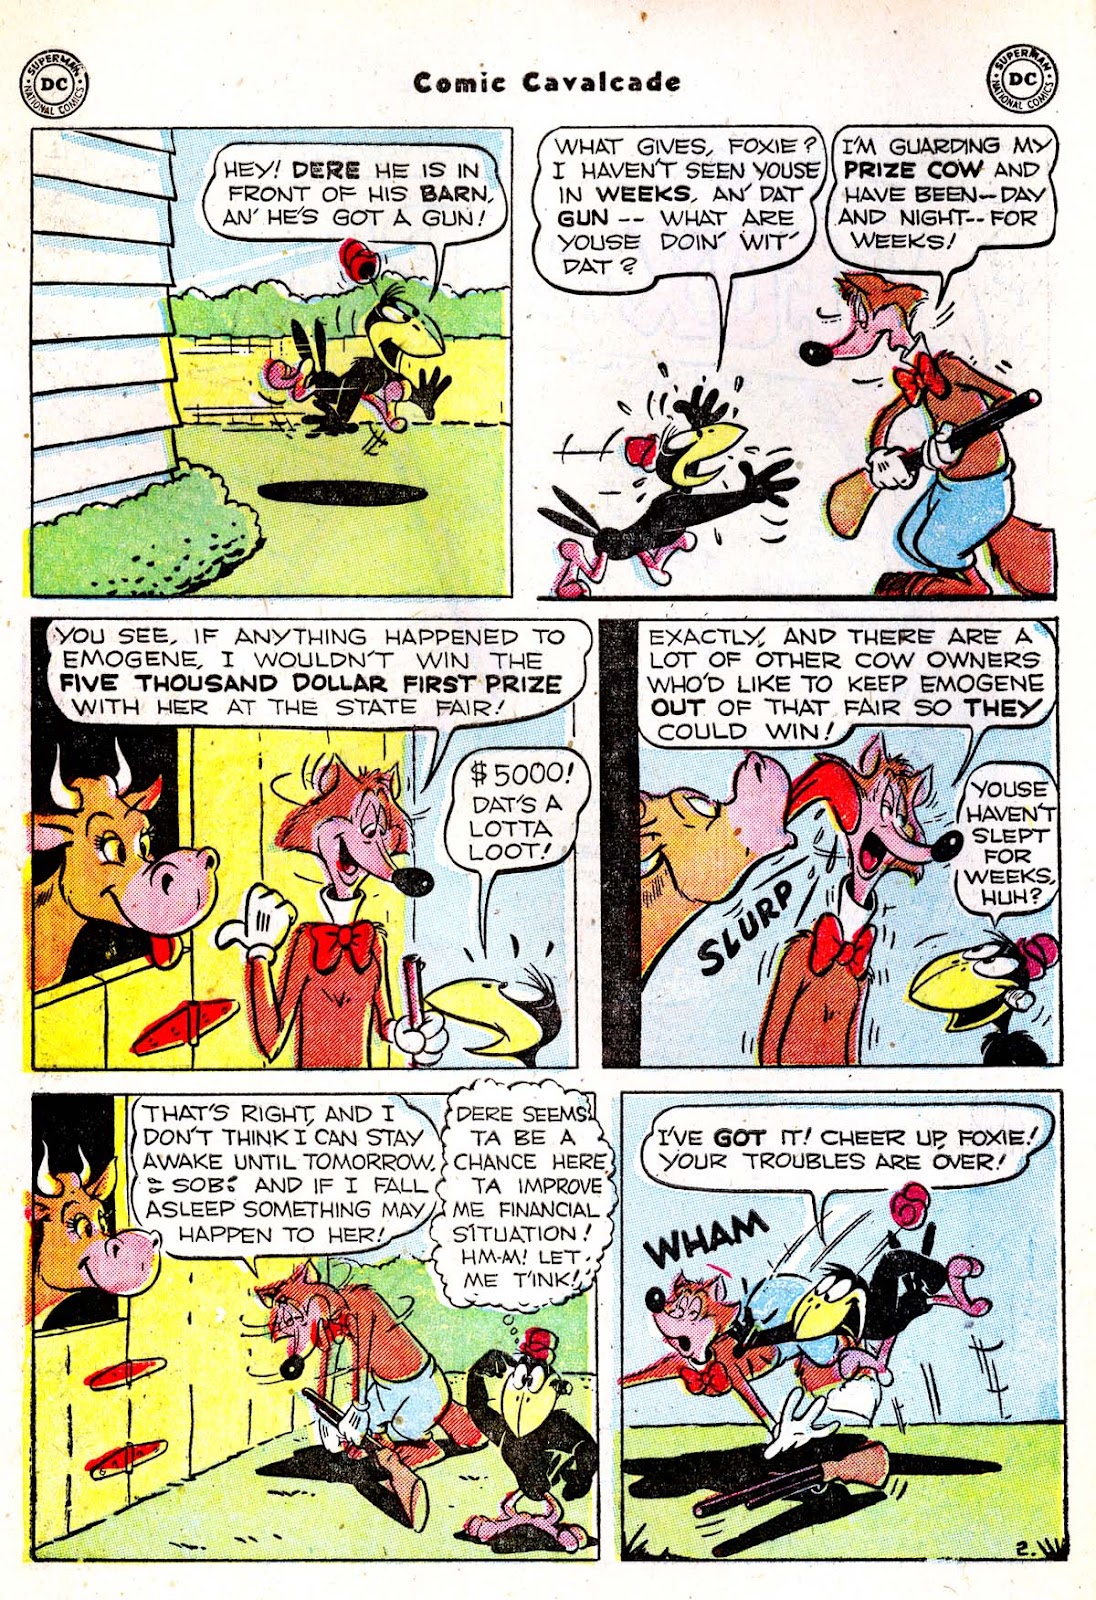 Comic Cavalcade issue 48 - Page 4